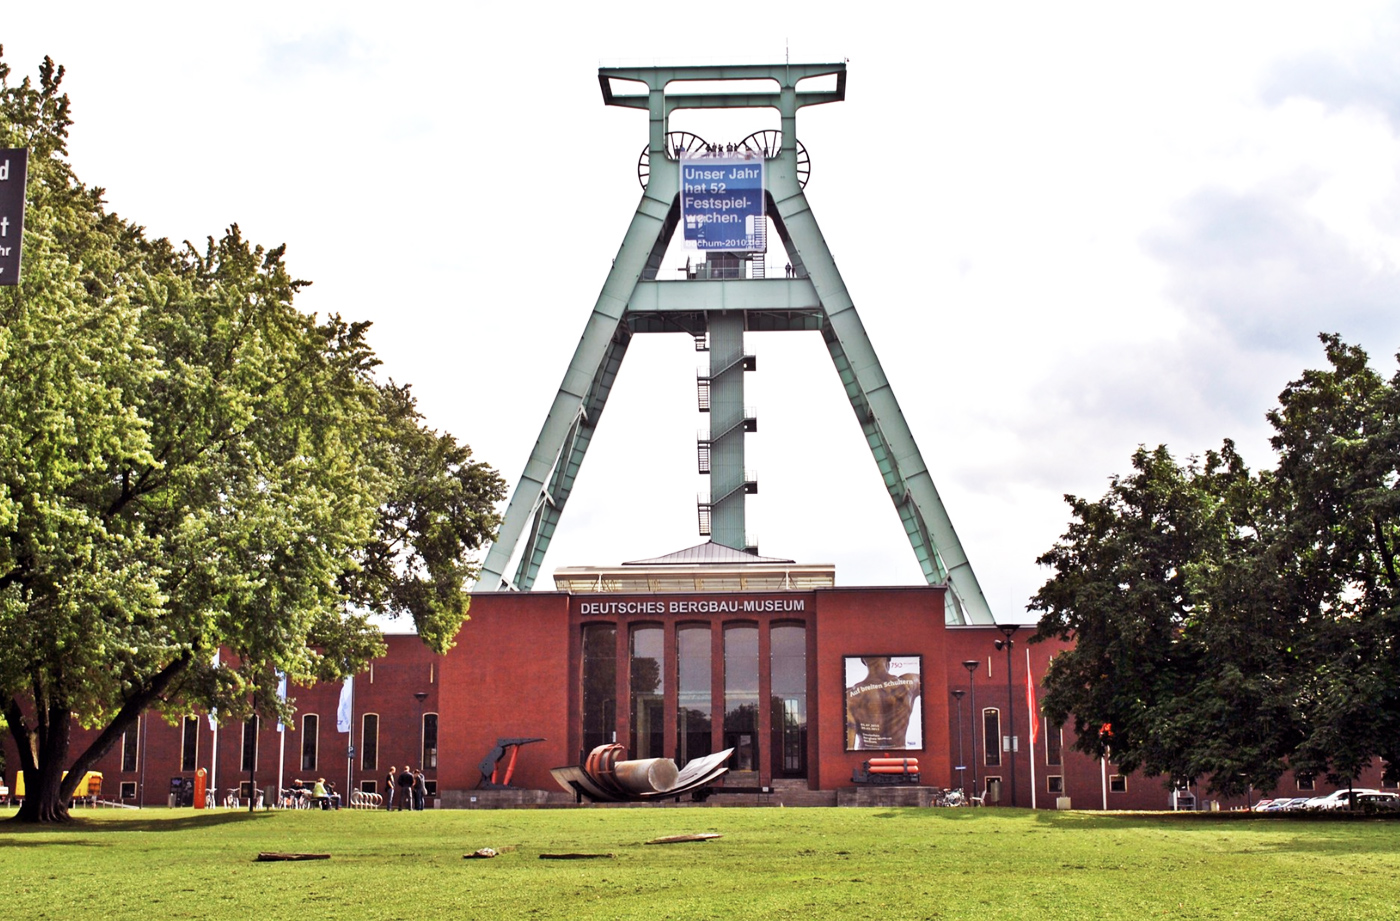 German Mining Museum (Deutsches Bergbau-Museum)